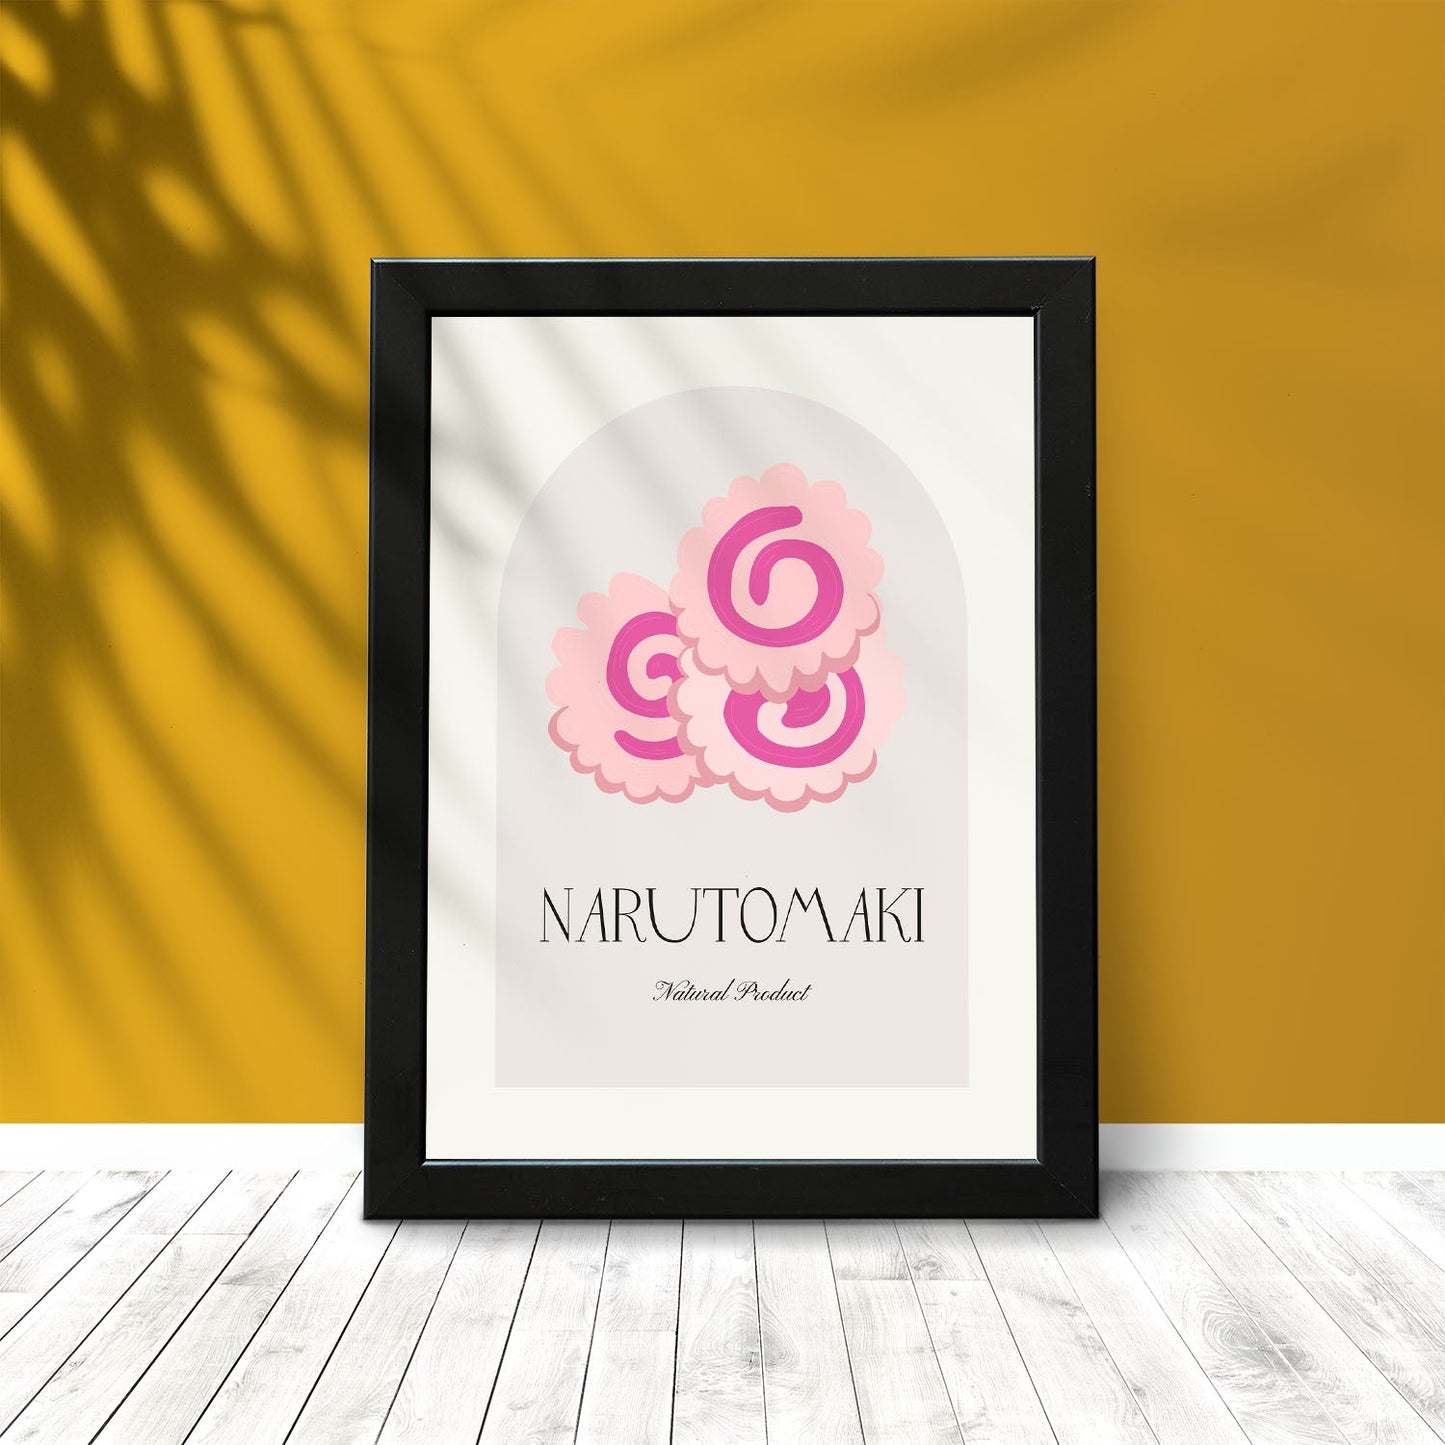 Narutomaki-Artwork-Nacnic-Nacnic Estudio SL